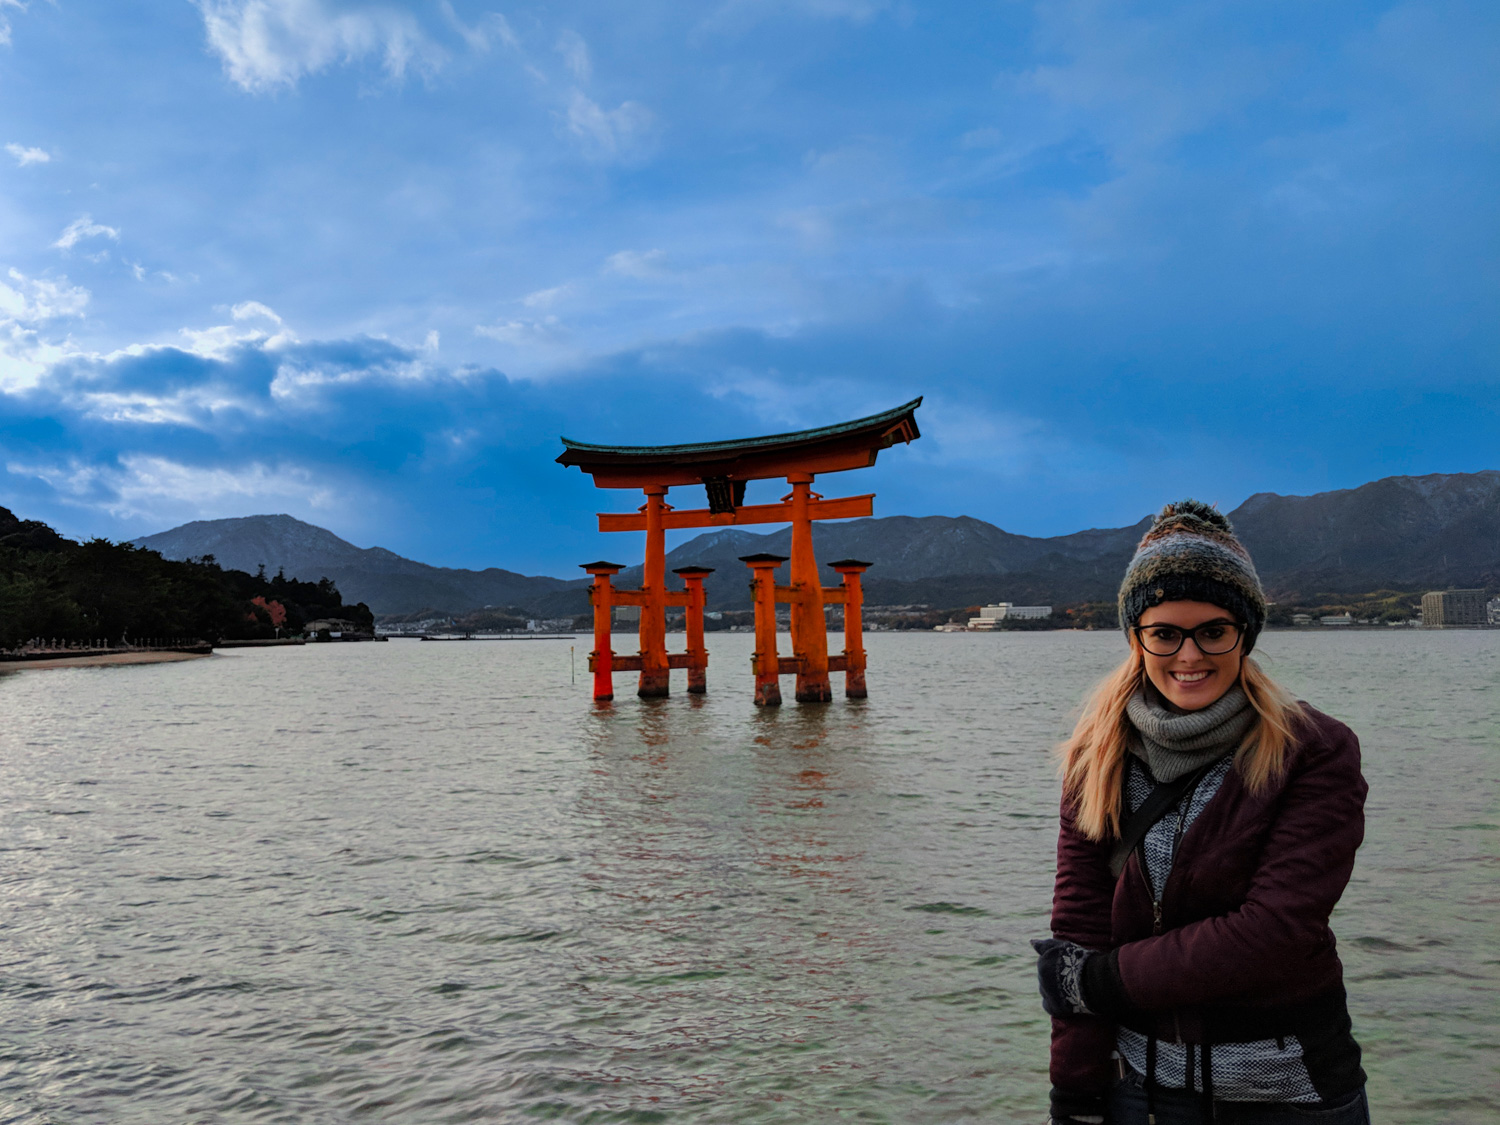 tourism in japan essay